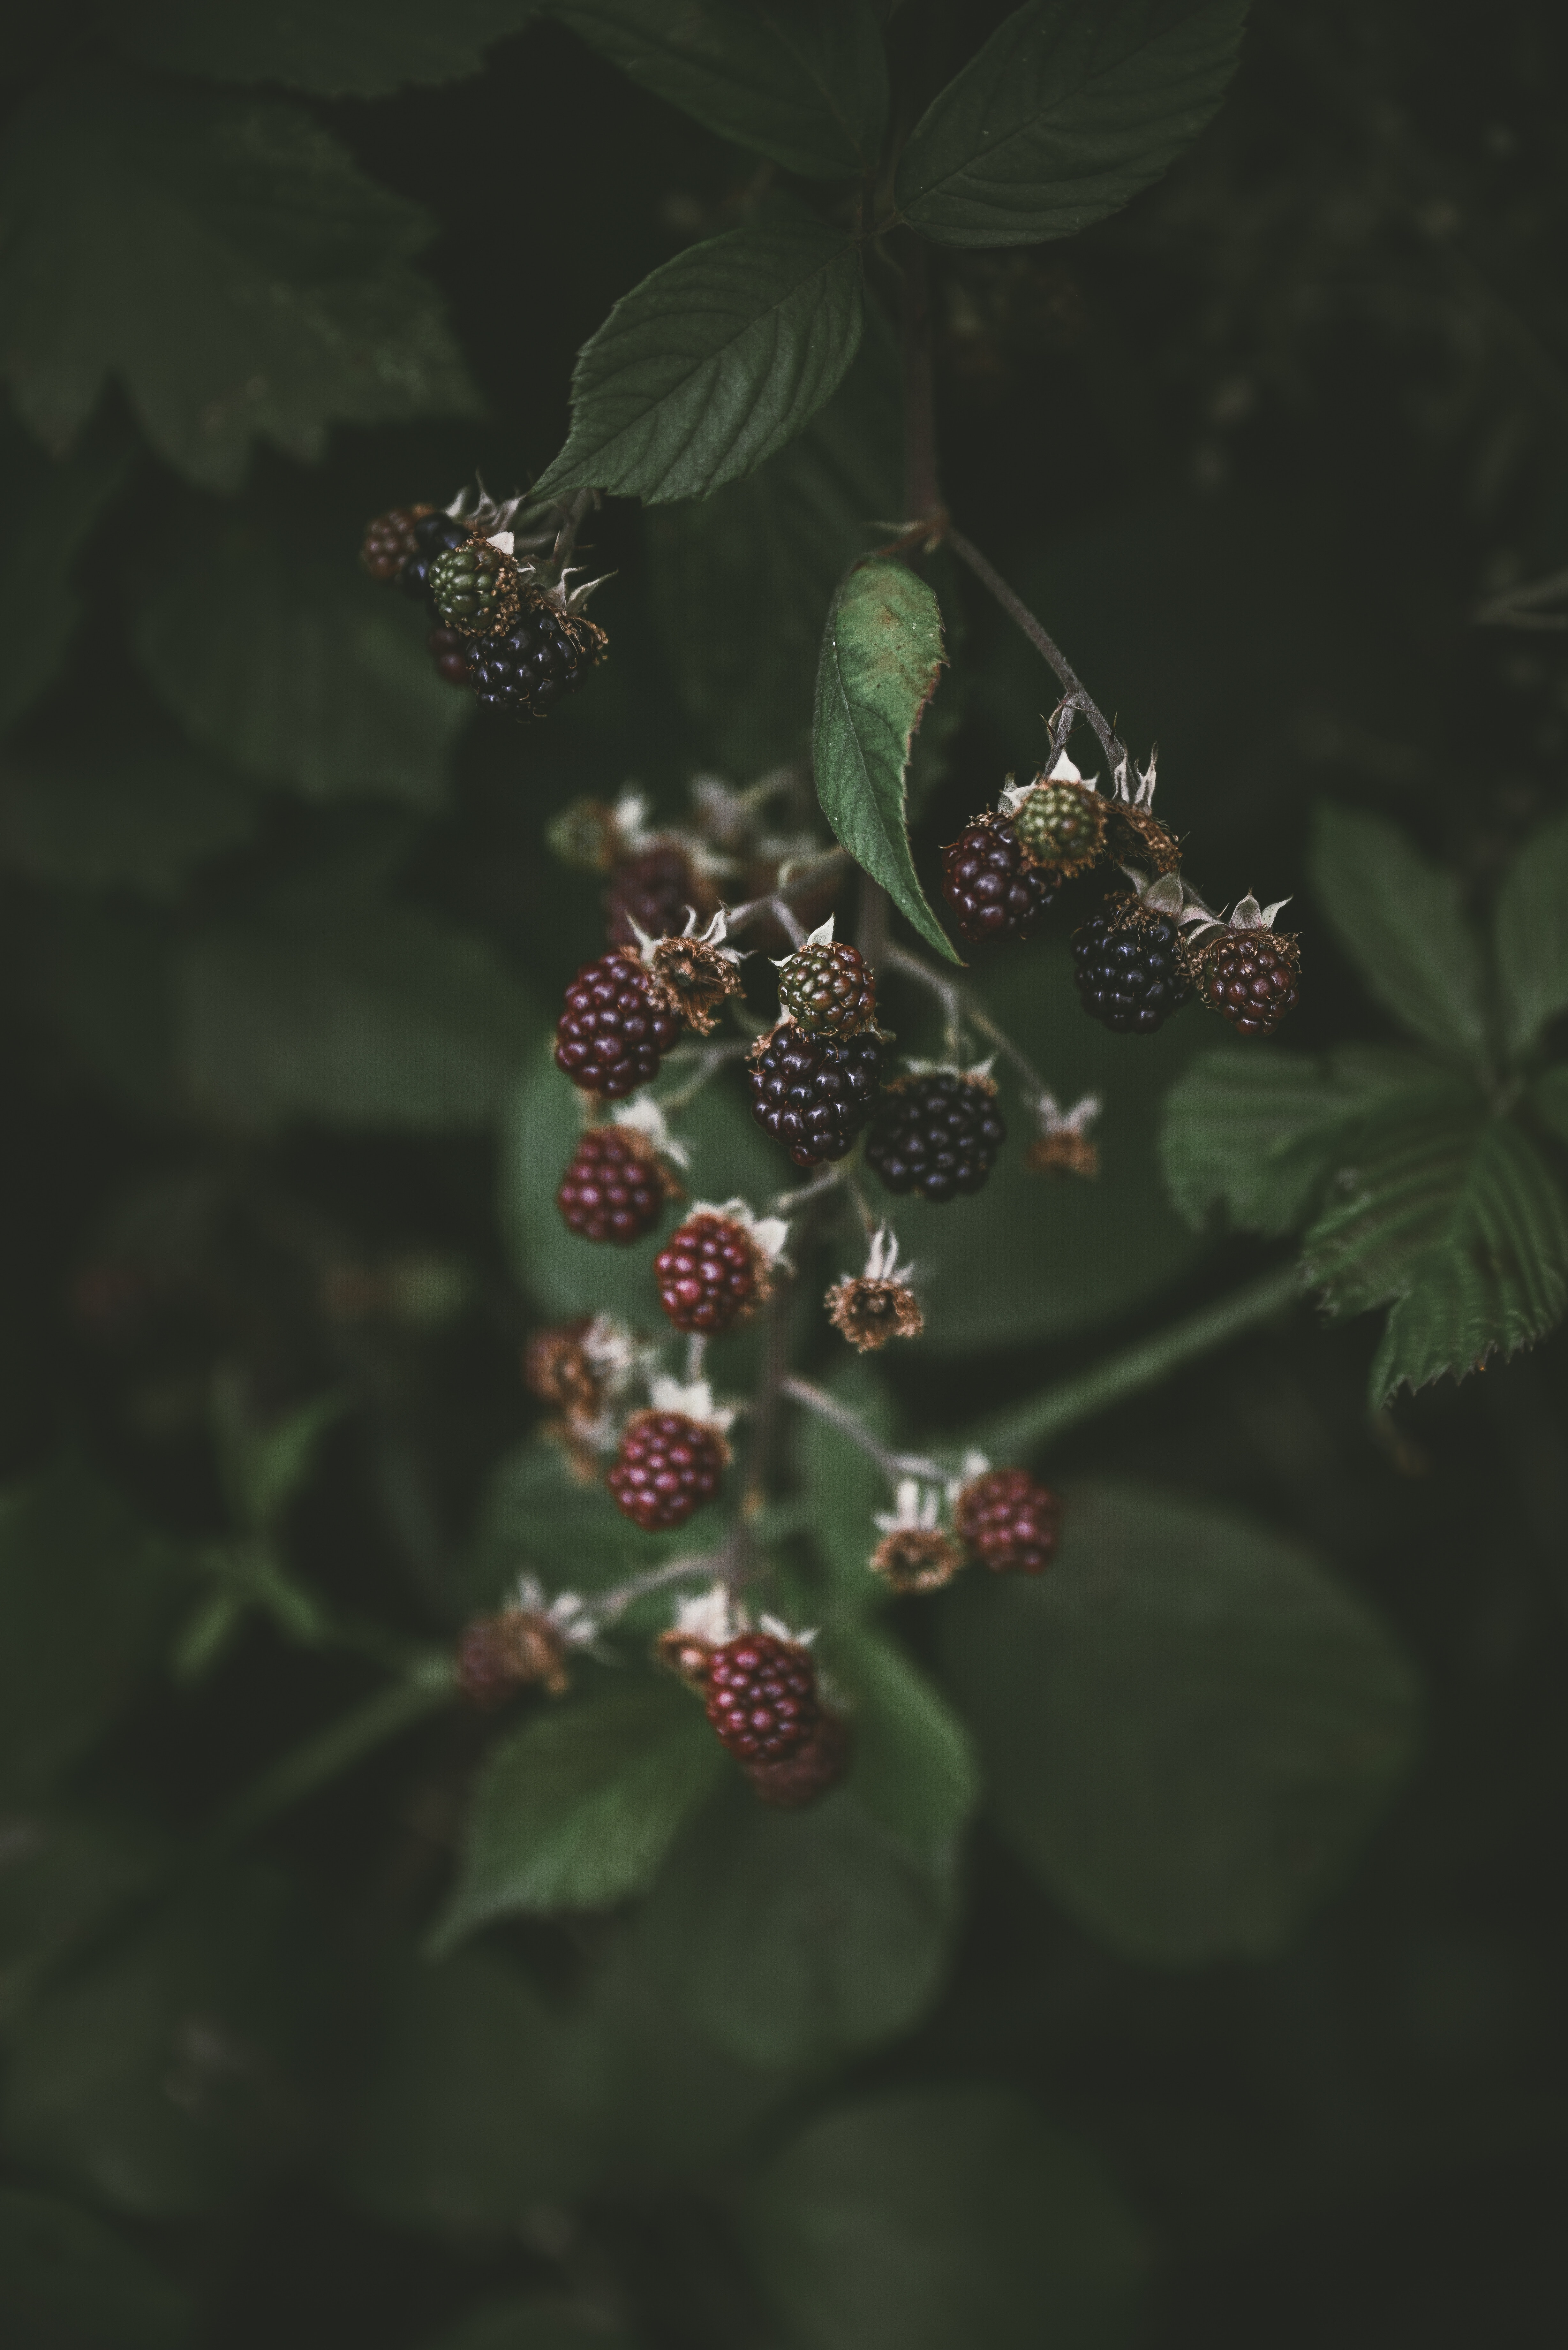 130729 Hintergrundbild herunterladen himbeere, berries, blackberry, makro, unschärfe, glatt - Bildschirmschoner und Bilder kostenlos